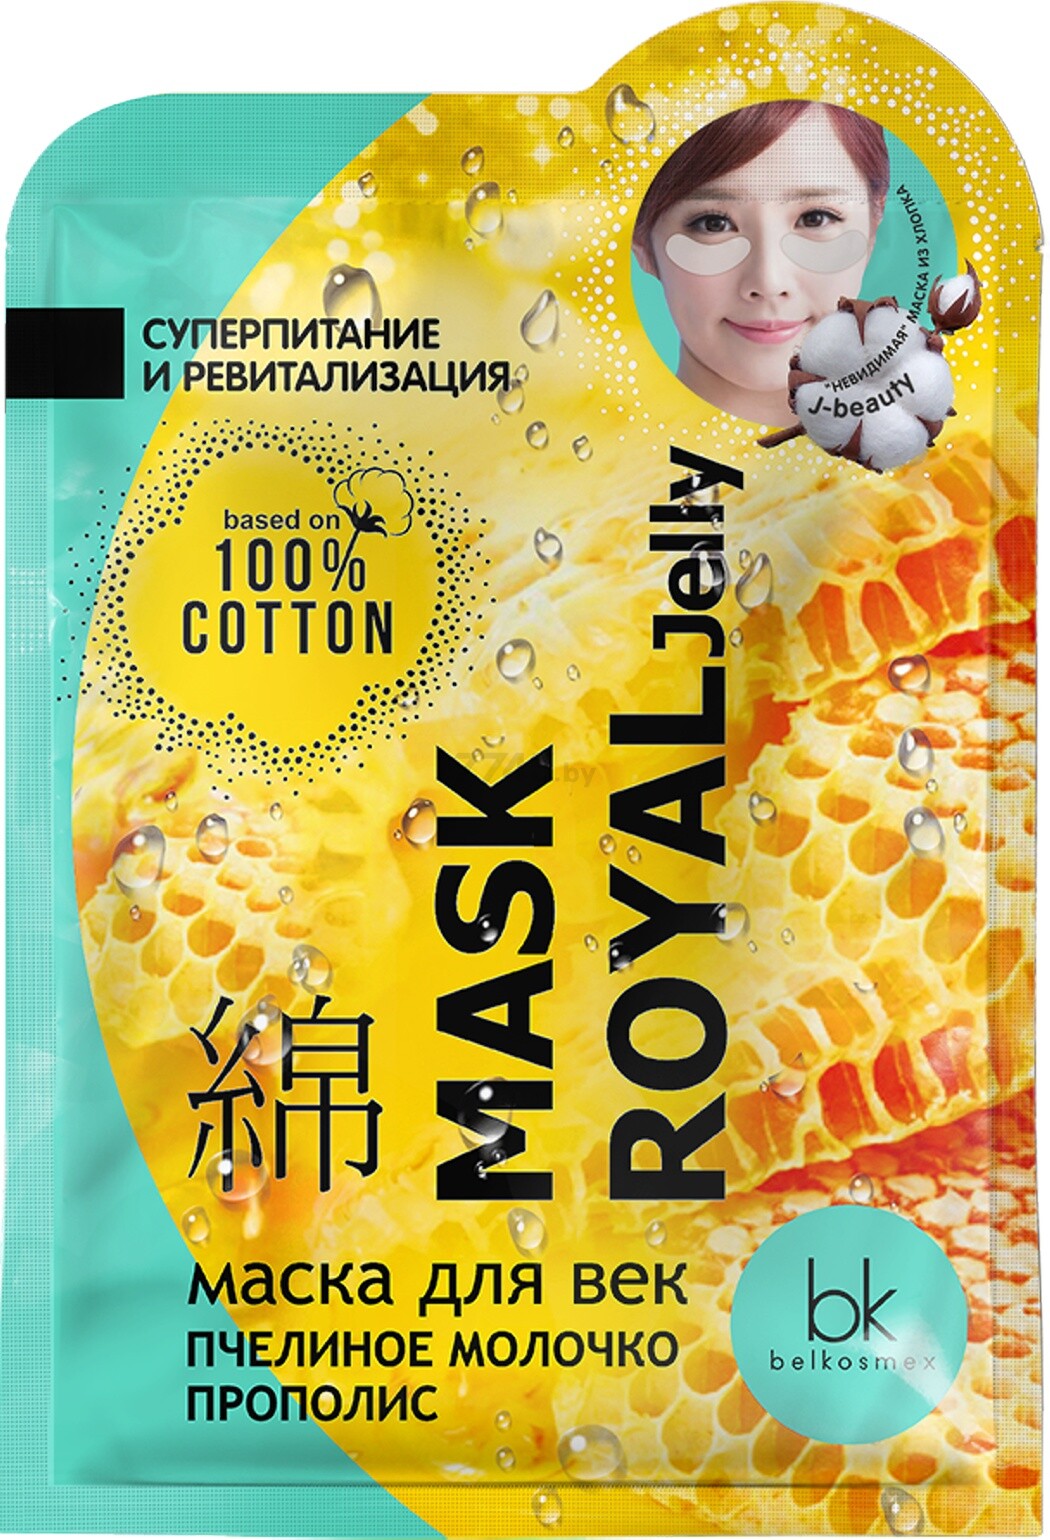 Патчи под глаза BELKOSMEX J-Beauty Mask Royal Jelly Пчелиное молочко Прополис 2 штуки (4810090010461)